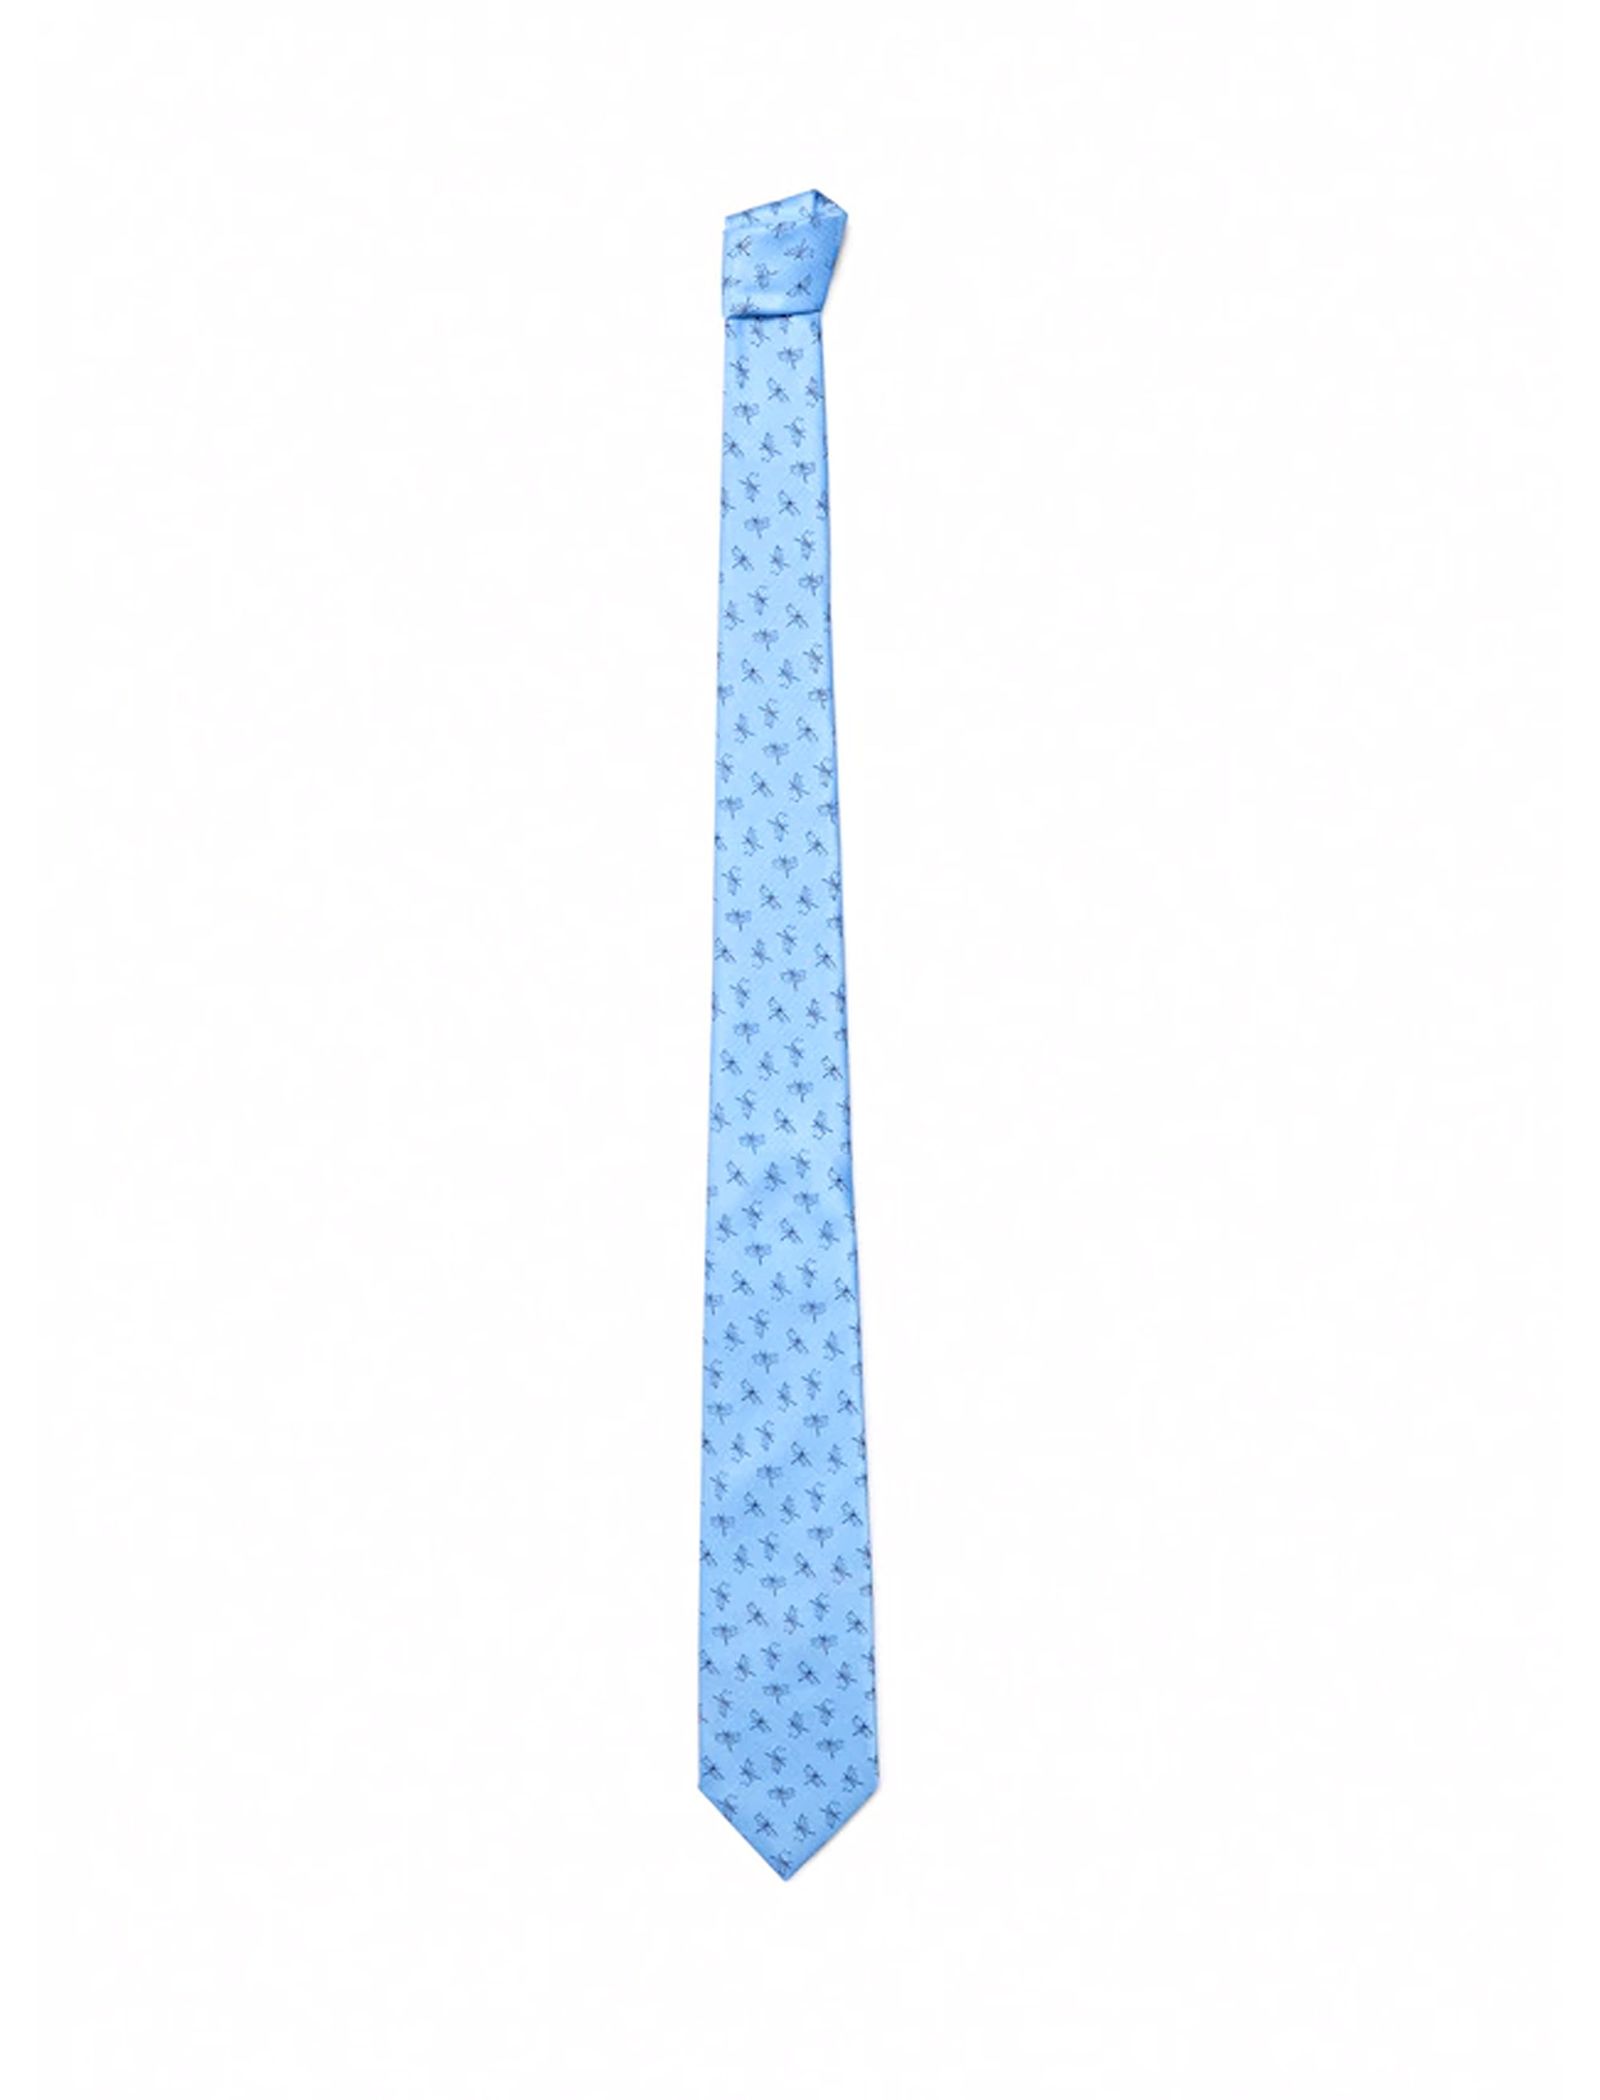 کراوات مانگو مدل 23040653 تک سایز - آبي - 2